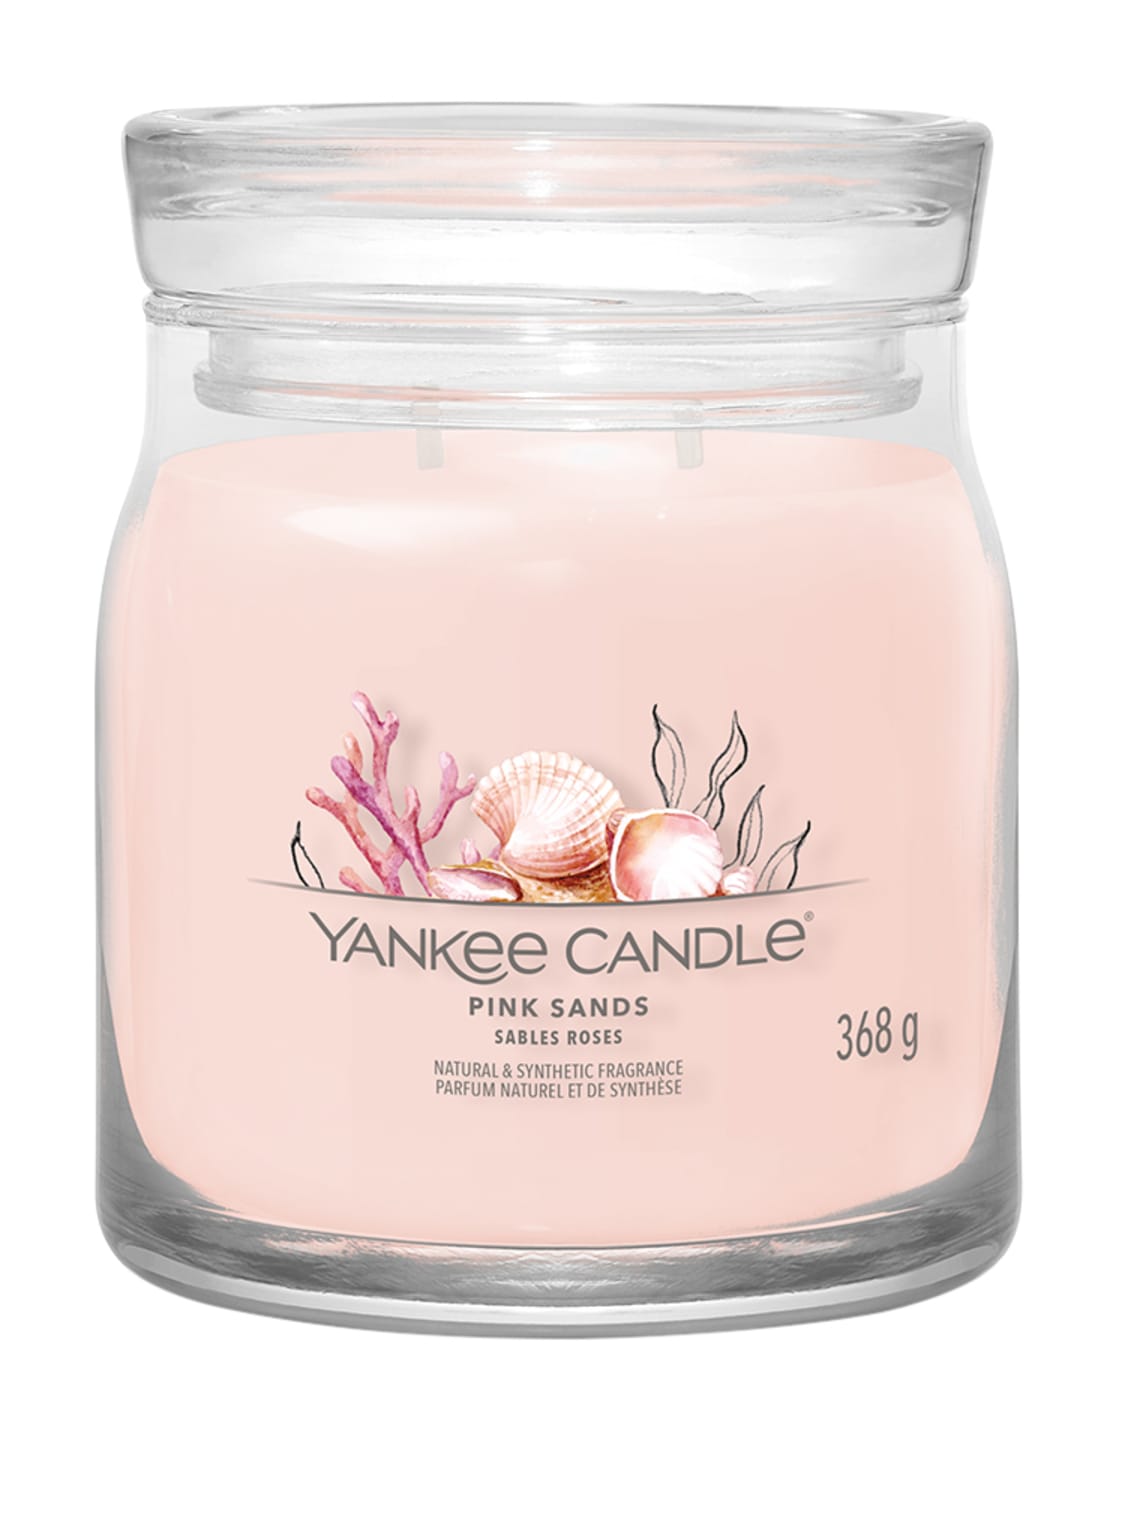 Yankee Candle Pink Sands Duftkerze 368 g von Yankee Candle